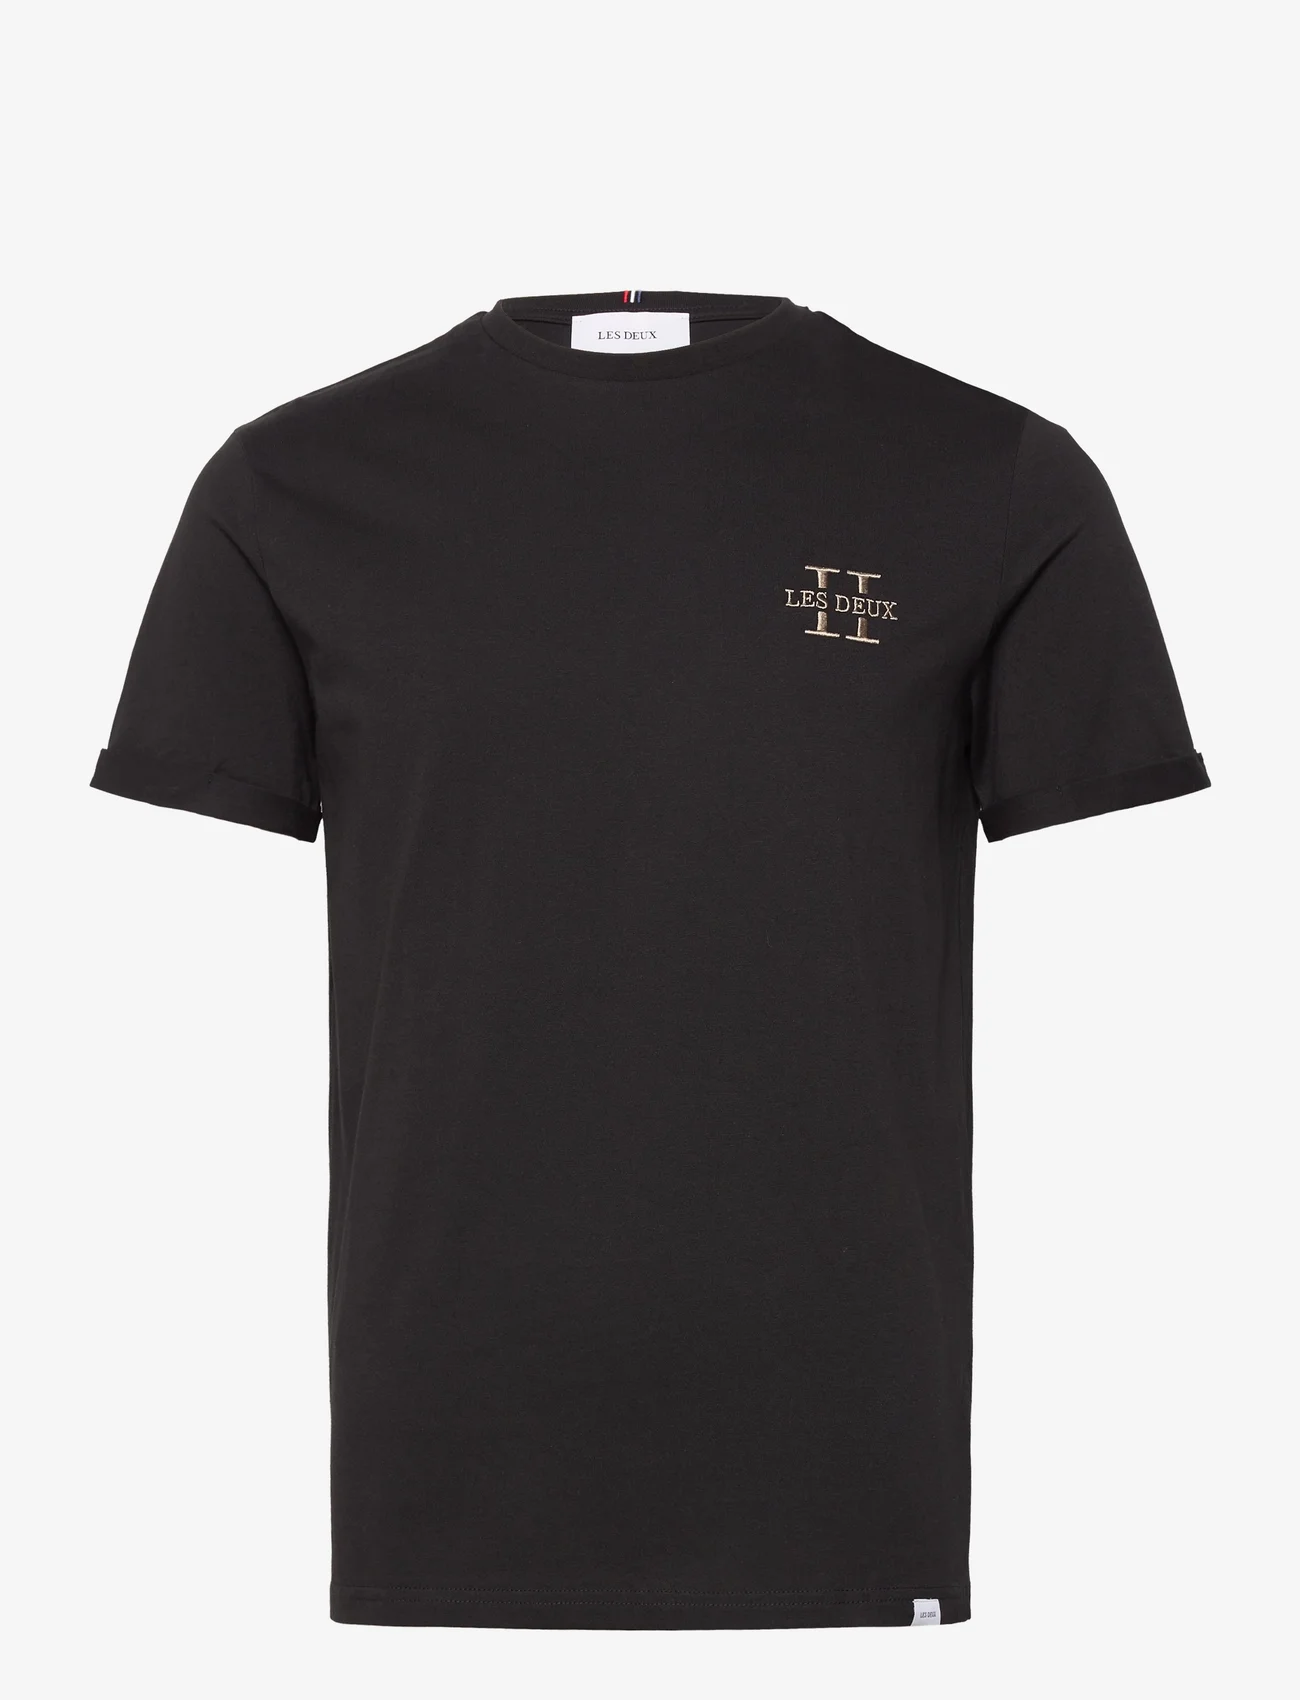 Les Deux - Les Deux II T-Shirt 2.0 - marškinėliai trumpomis rankovėmis - black/platinum - 0